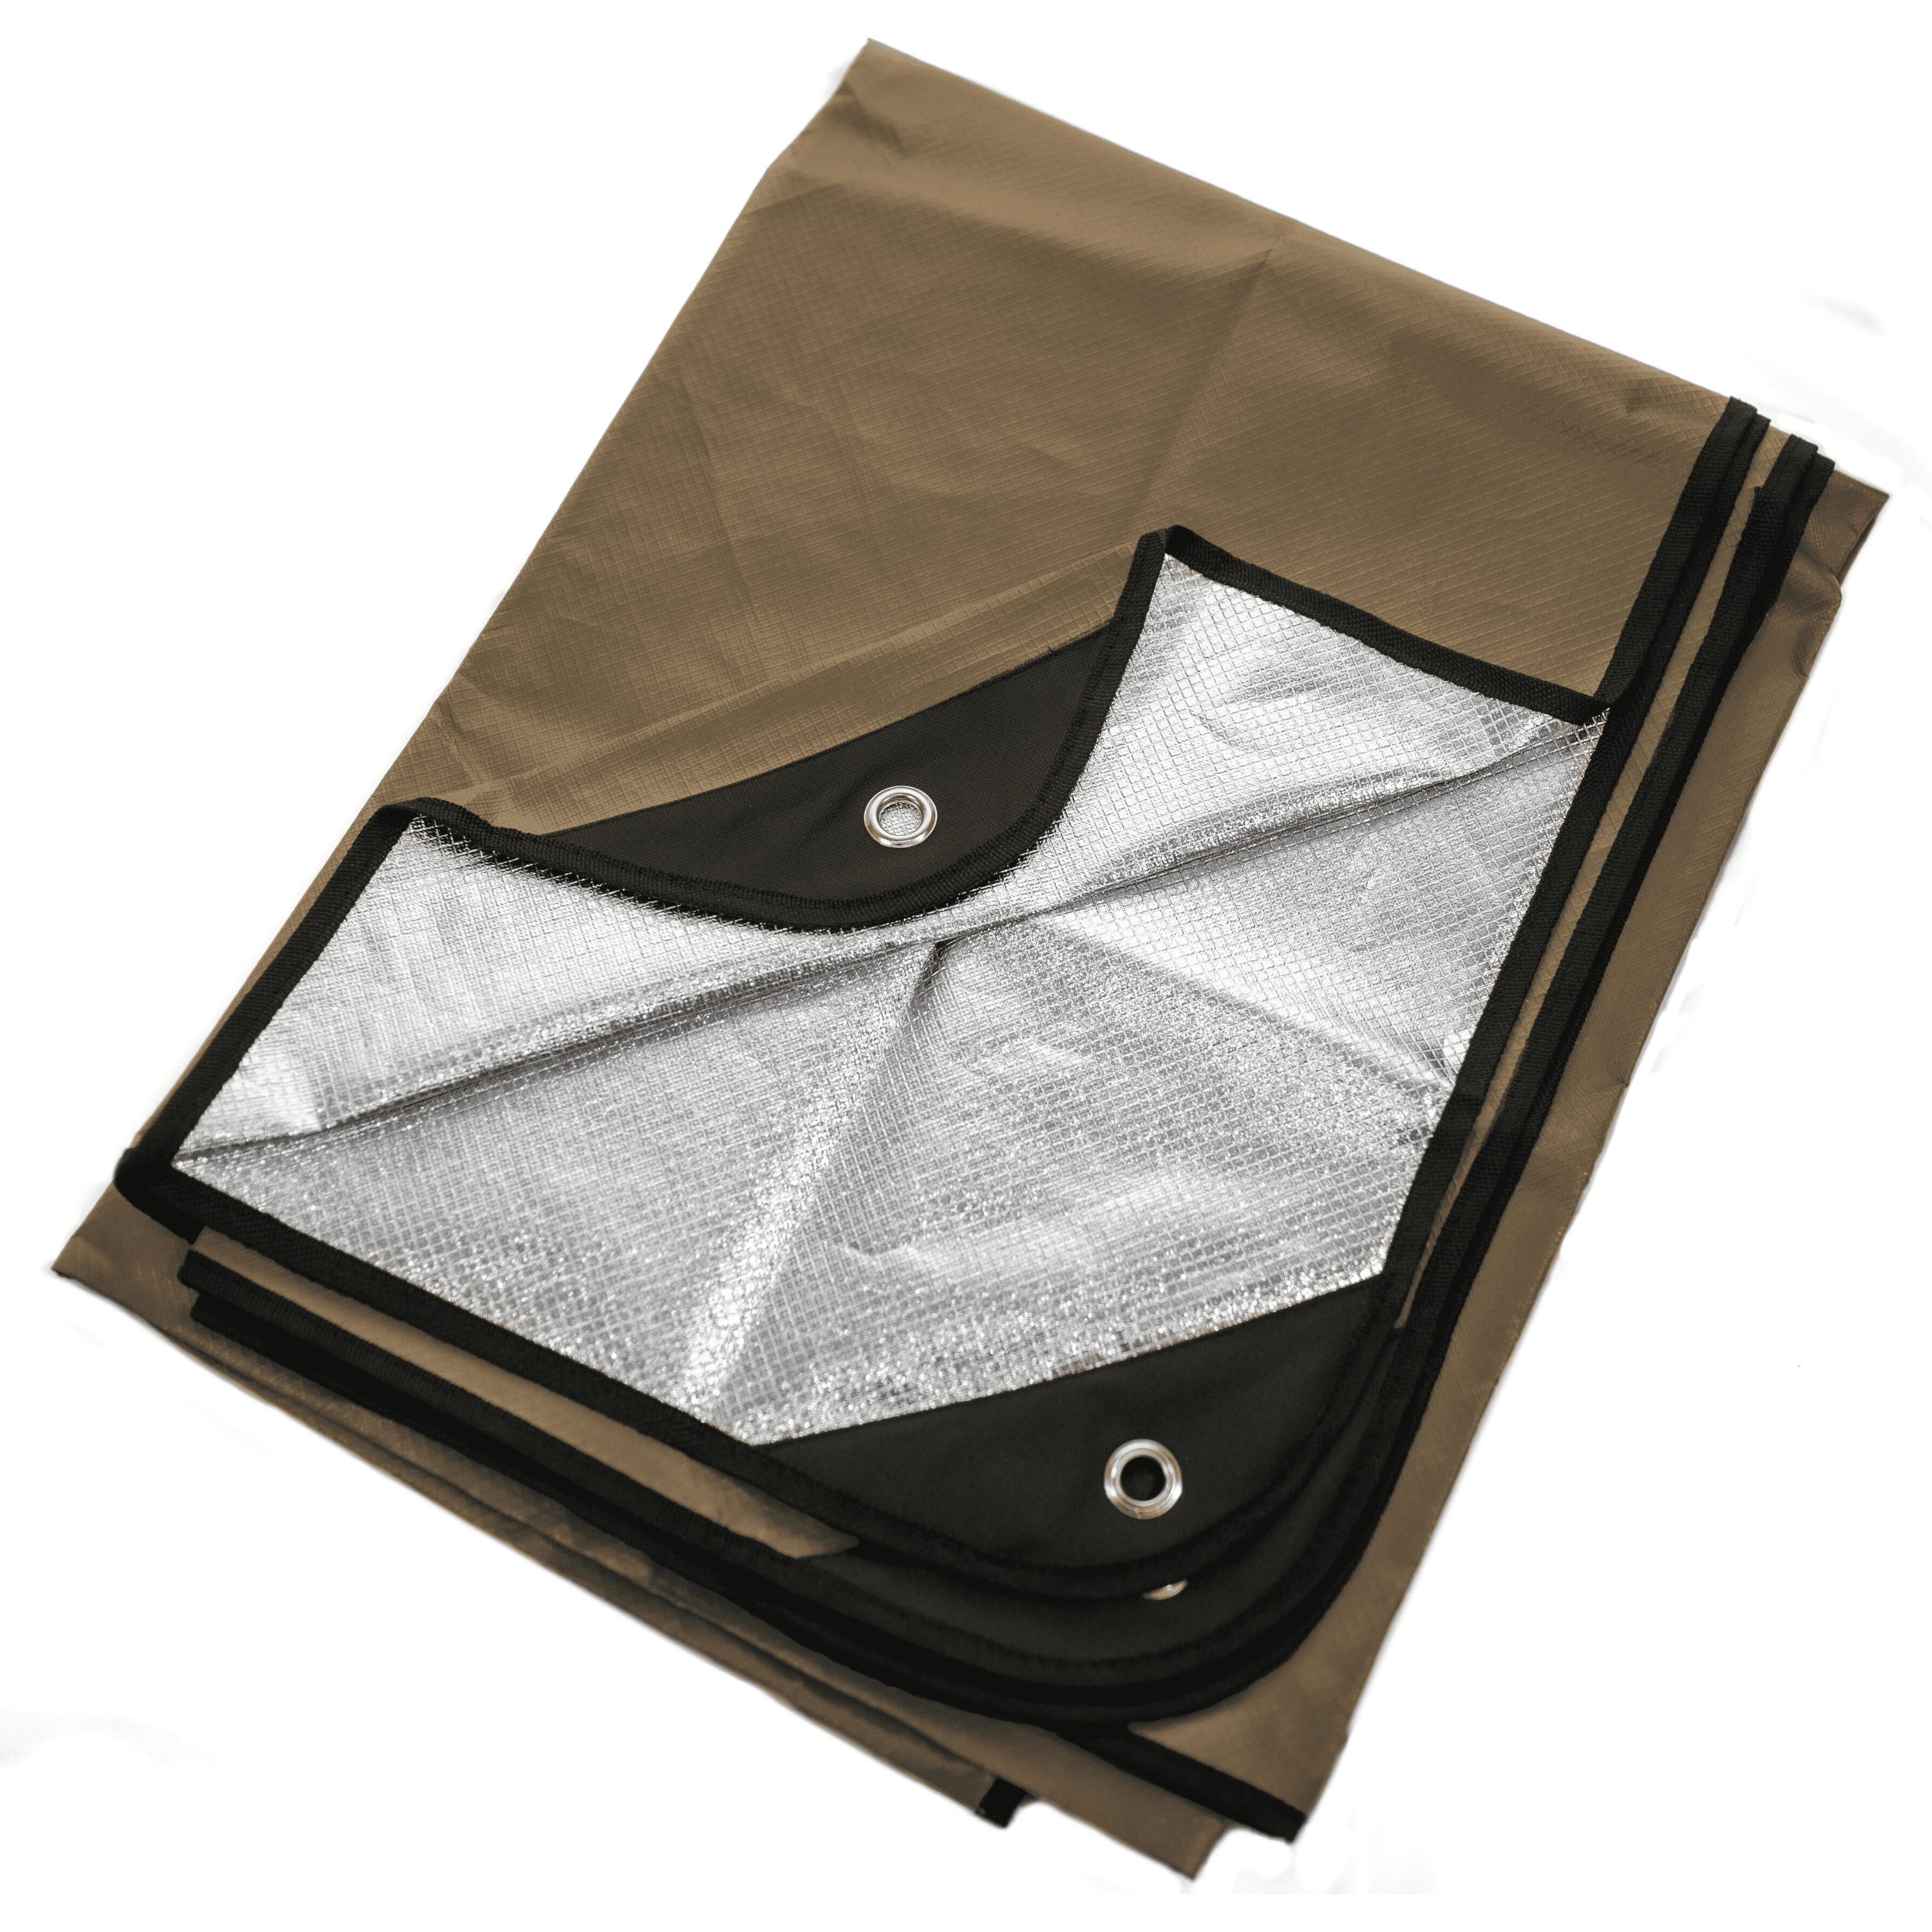  ULTECHNOVO 1pc Survive Outdoor Blanket Insulation